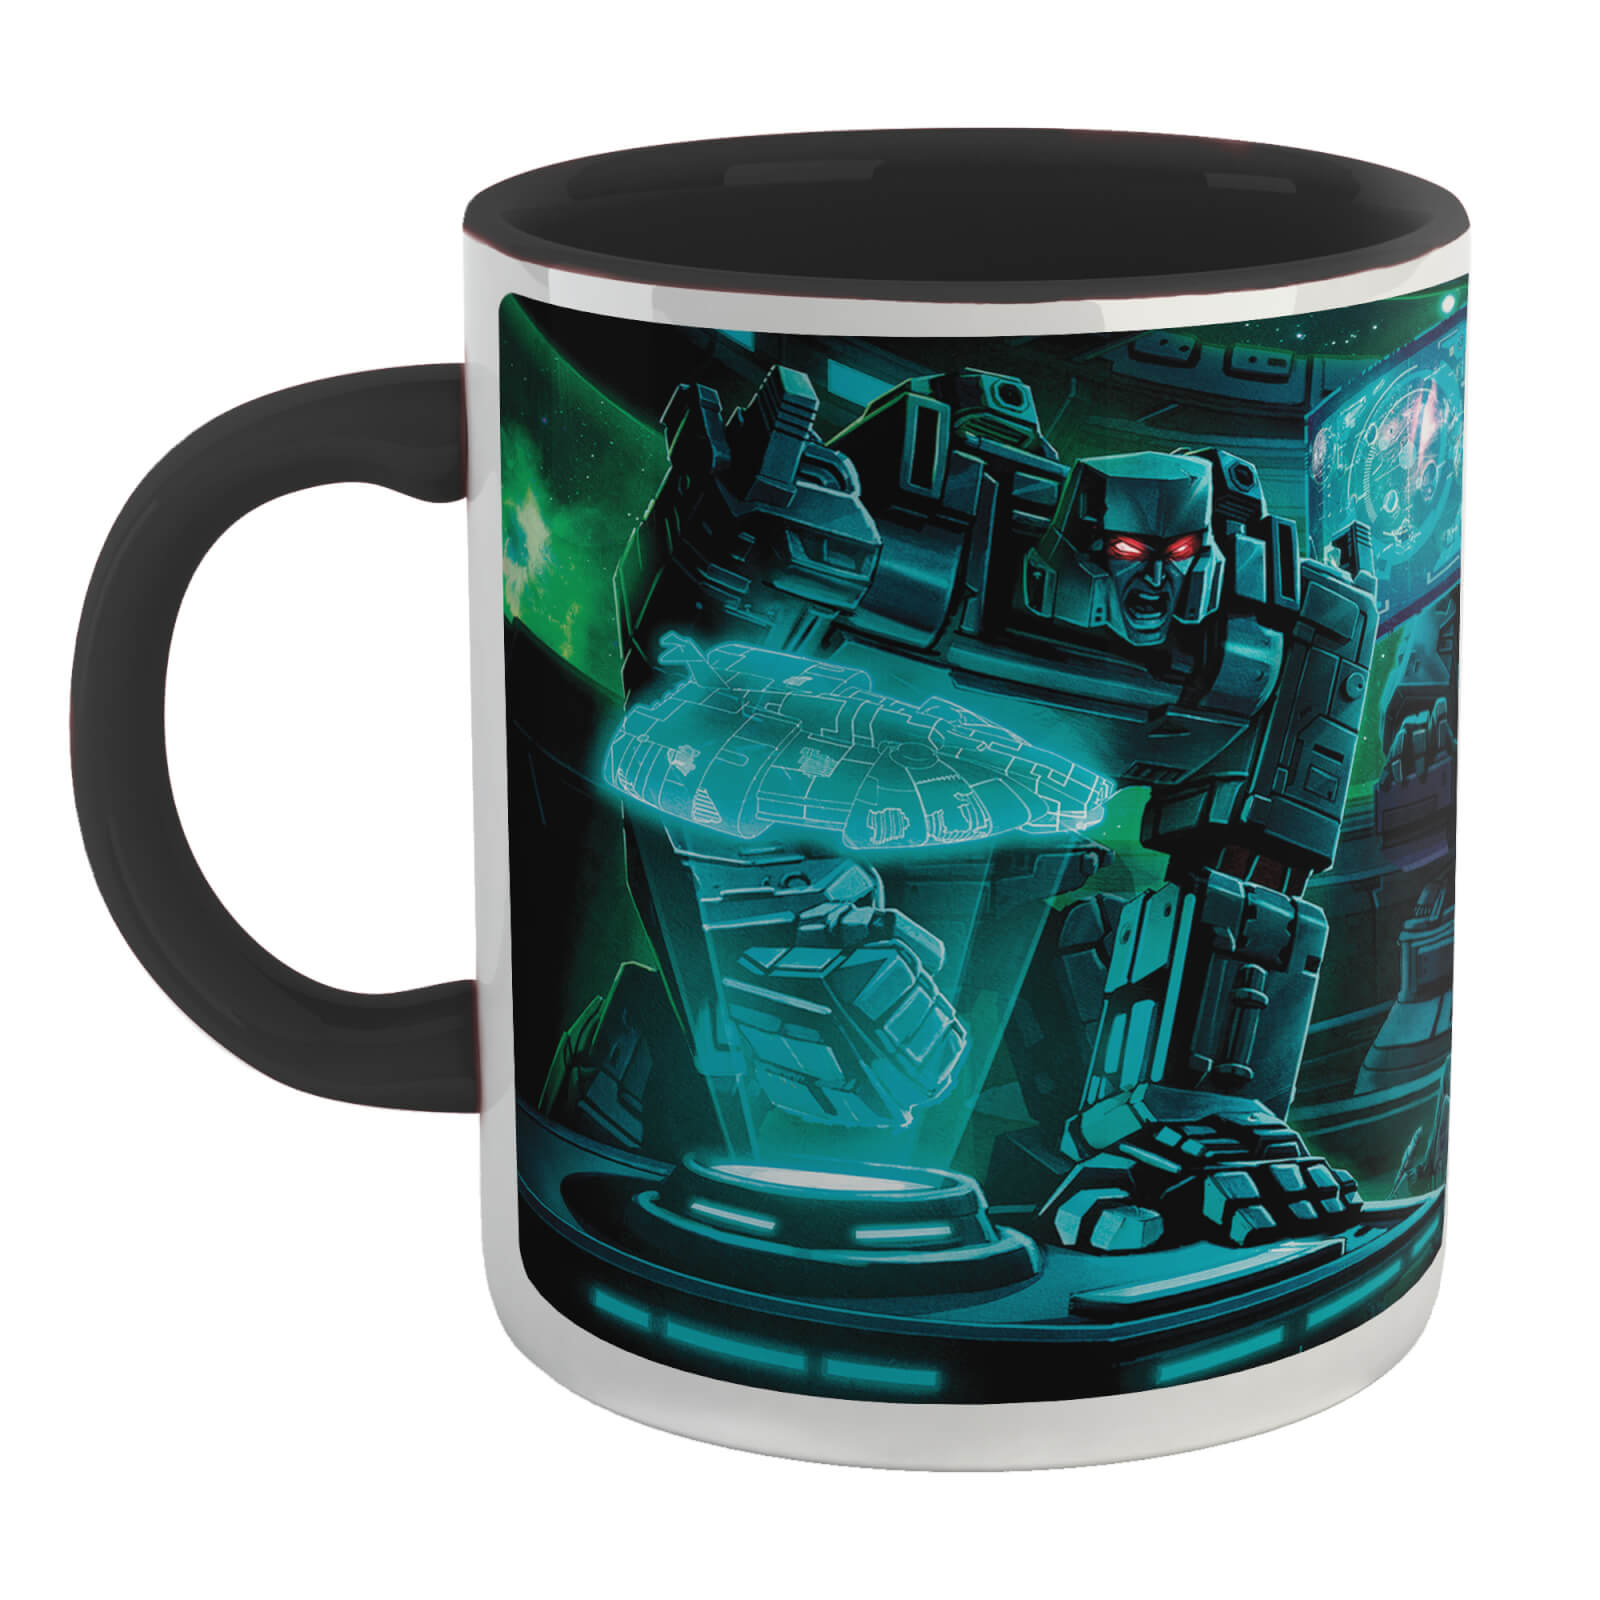 Transformers Decepticon Mug - White/Black